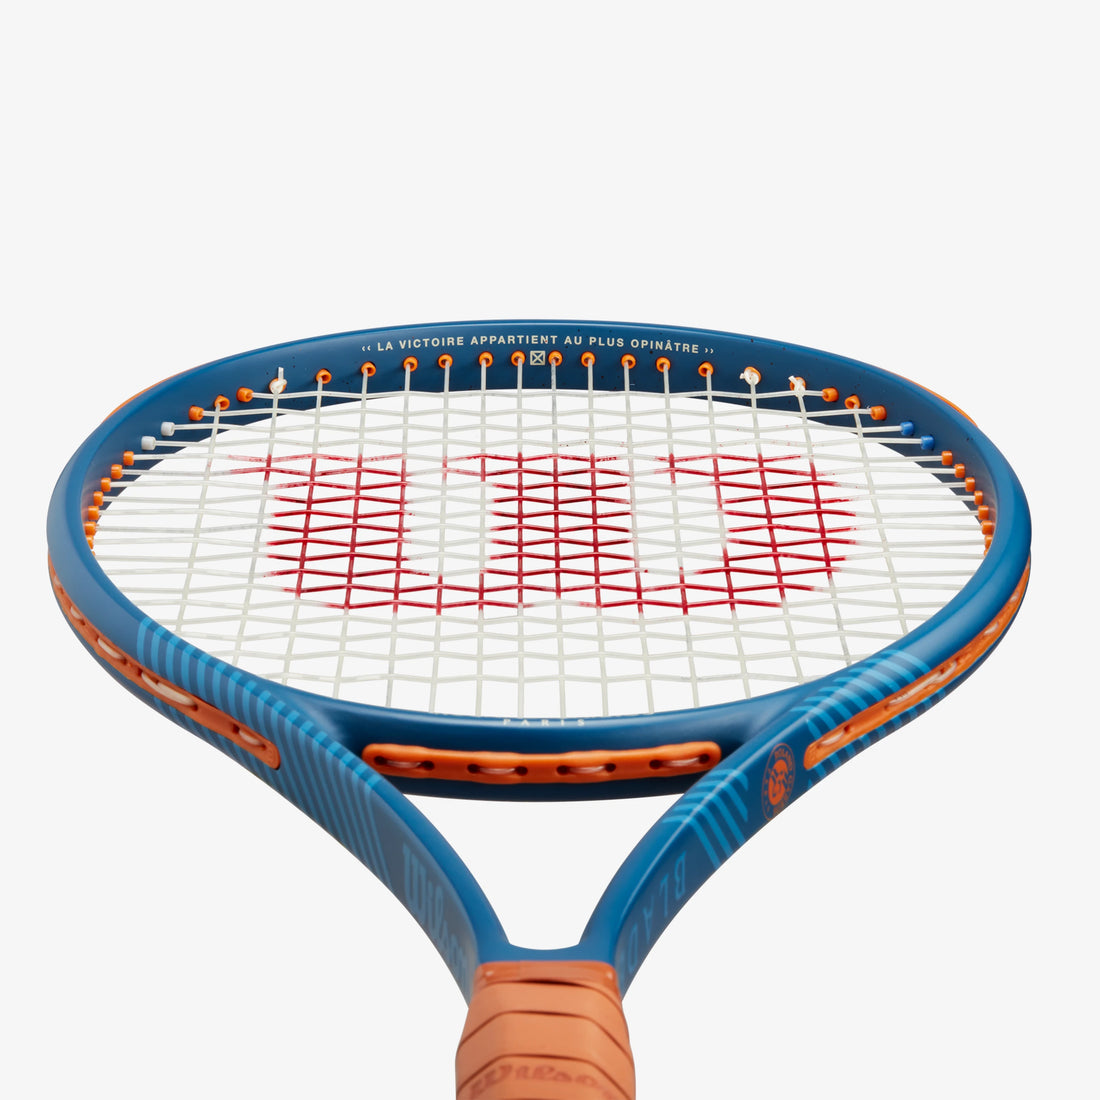 2024 Wilson Roland Garros BLADE 98 (16x19) V9 Tennis Racket